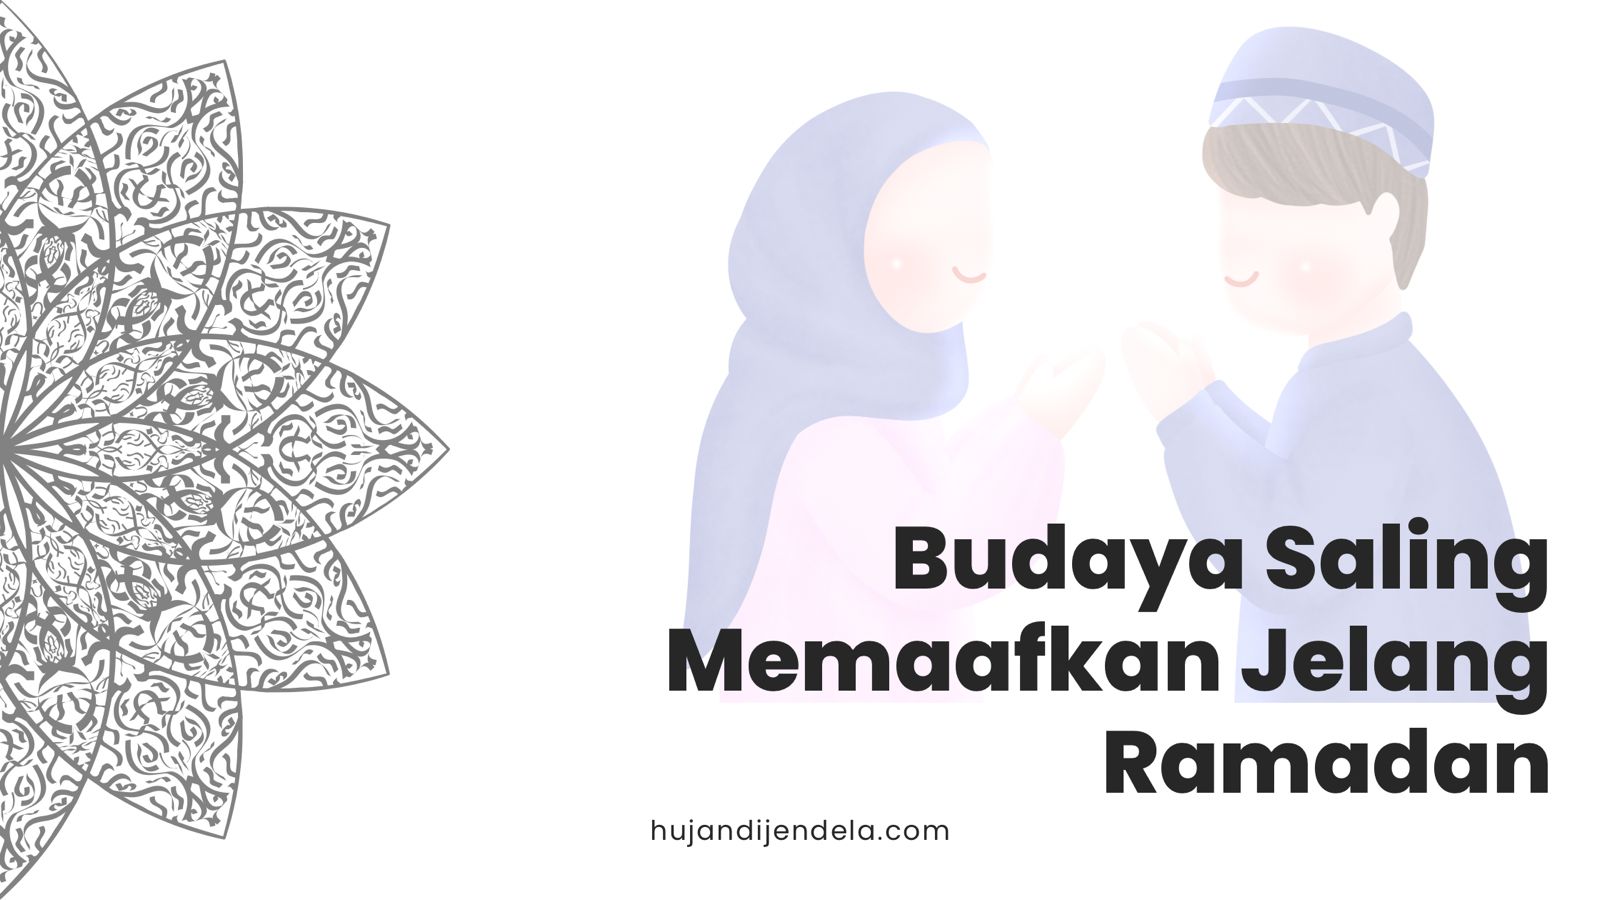 Budaya Saling Memaafkan Jelang Ramadan cover 2